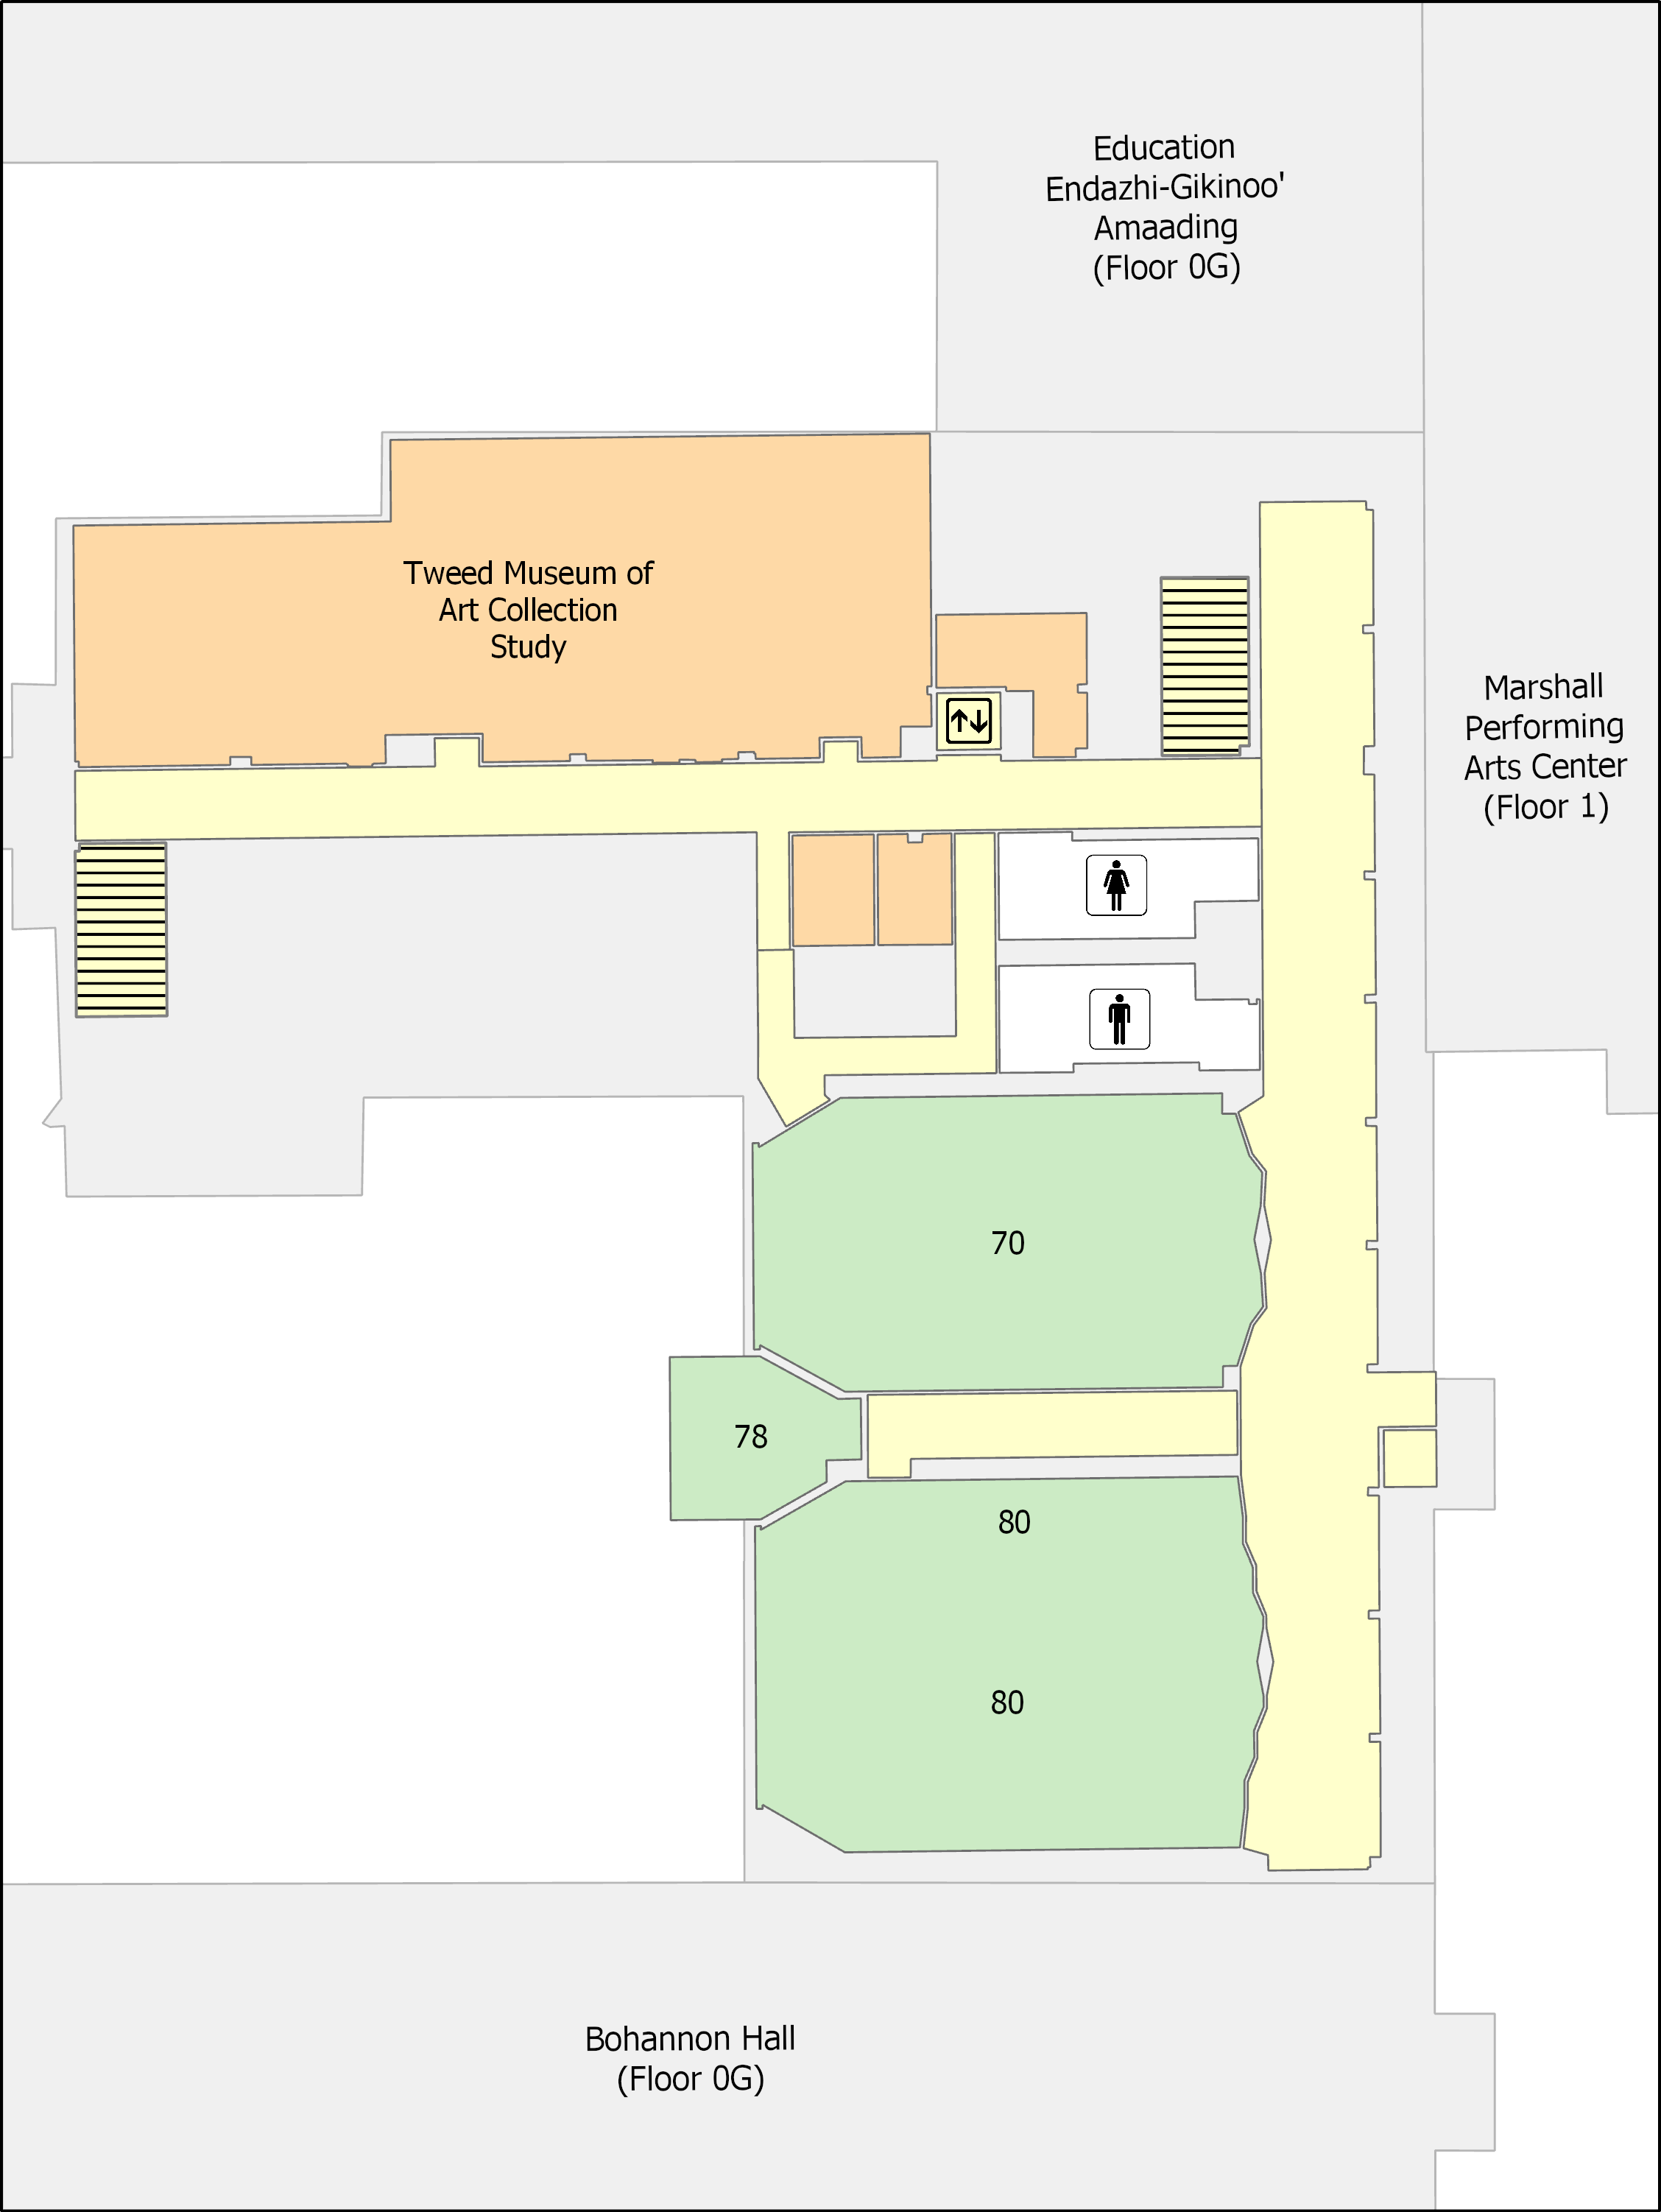 Ground floor floorplan